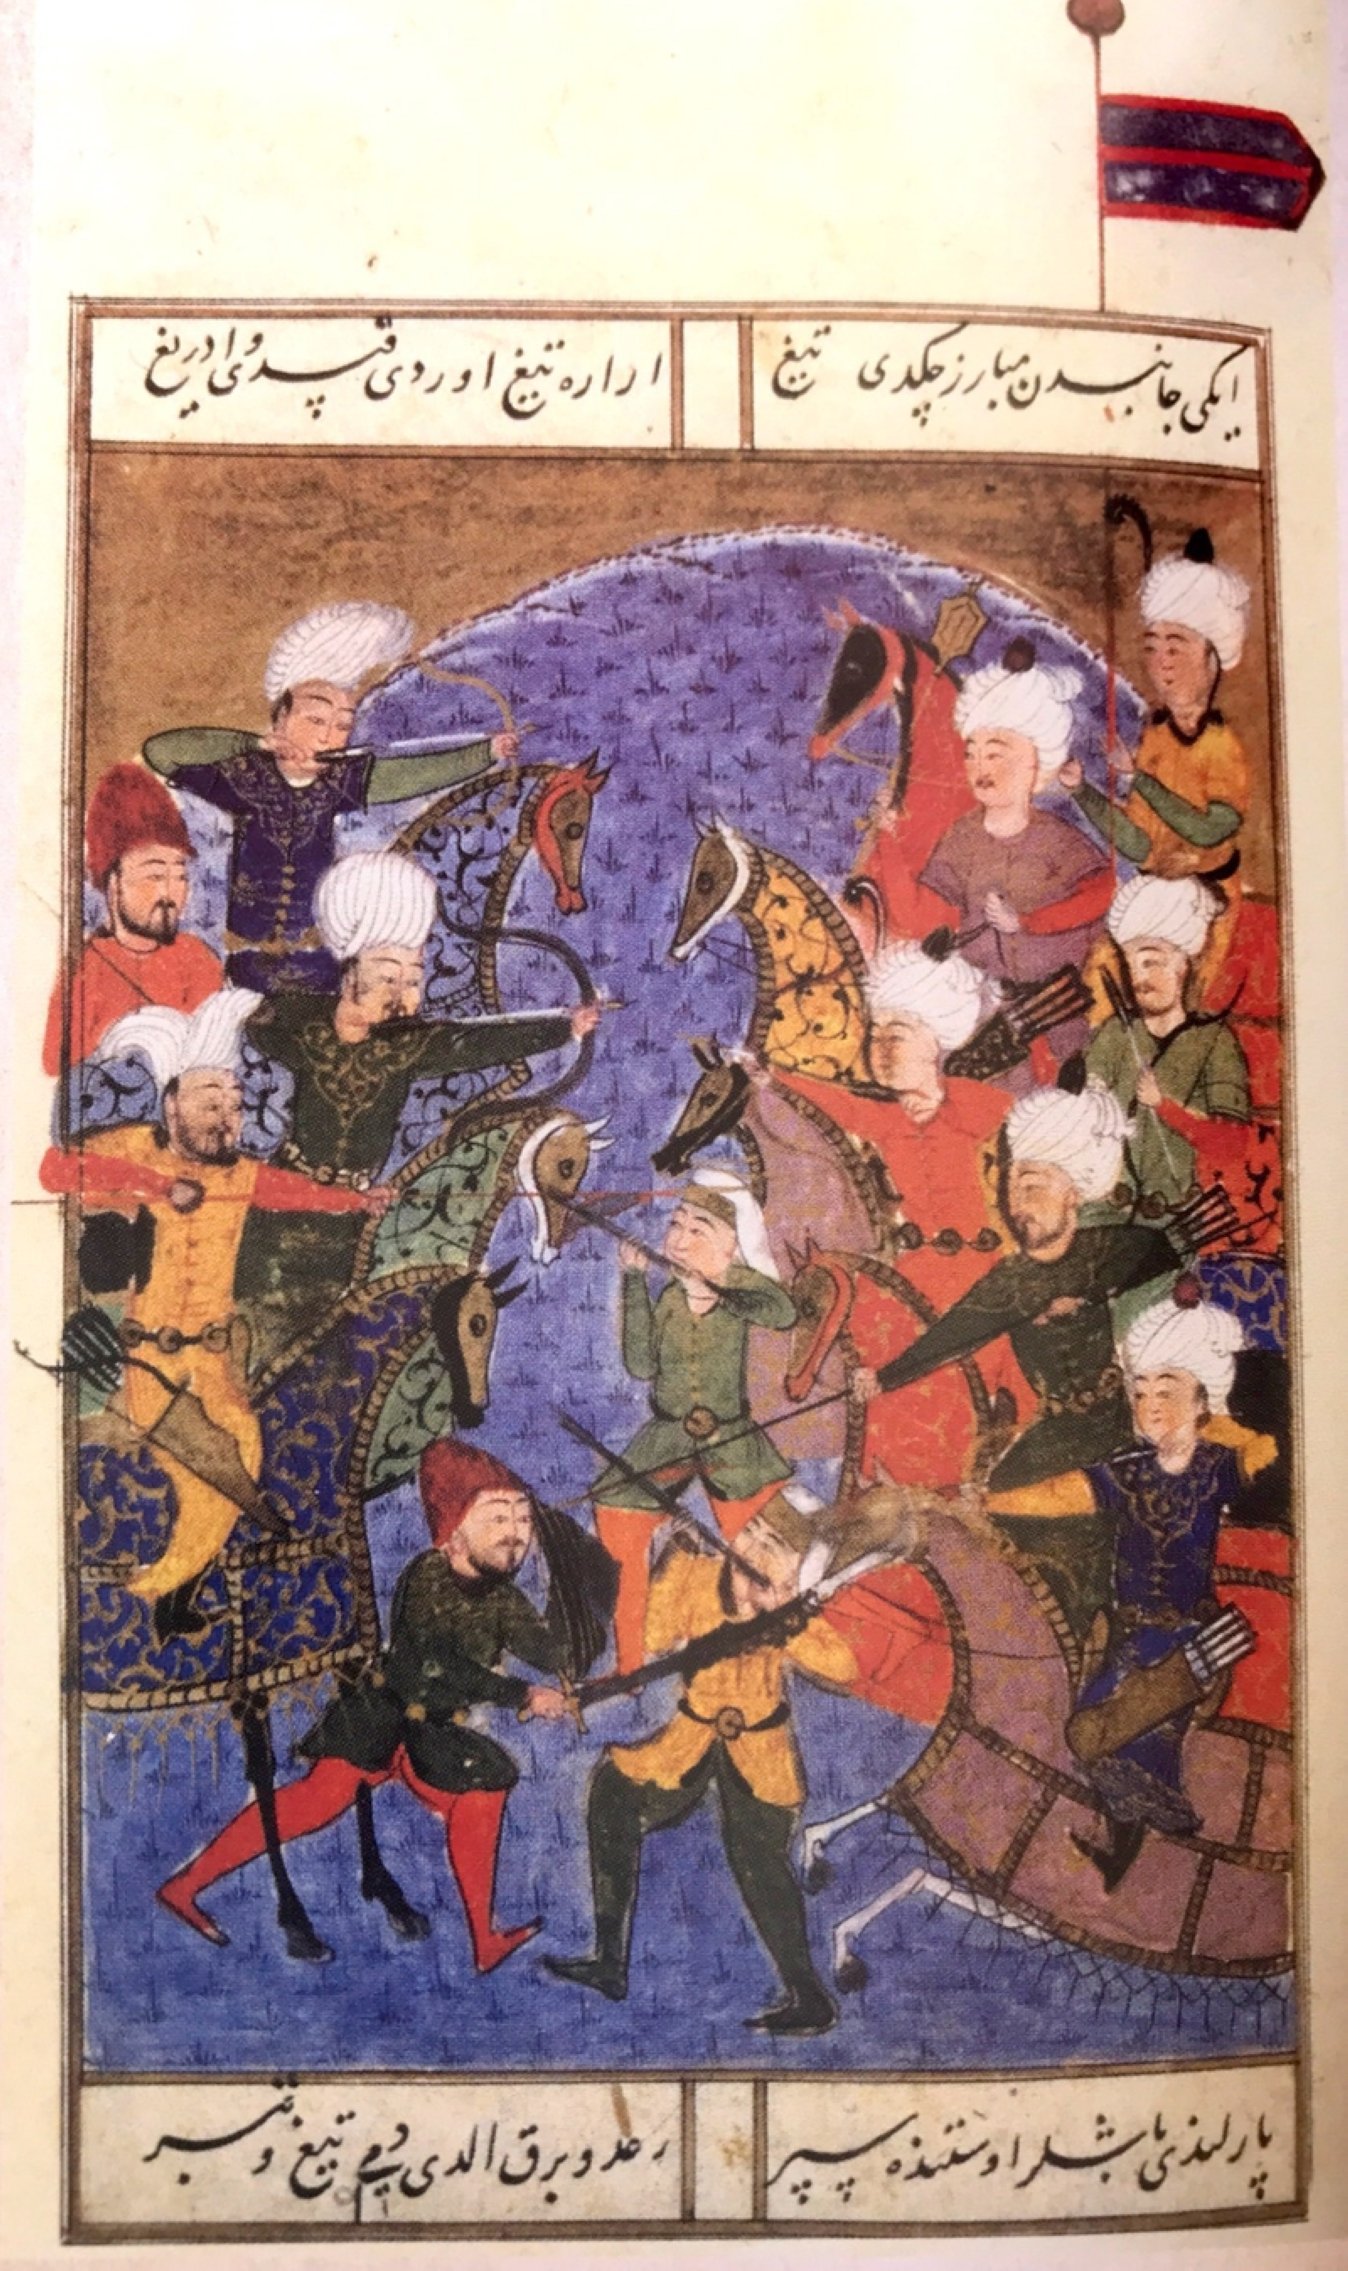 A miniature of the Battle of Marj Dabiq.